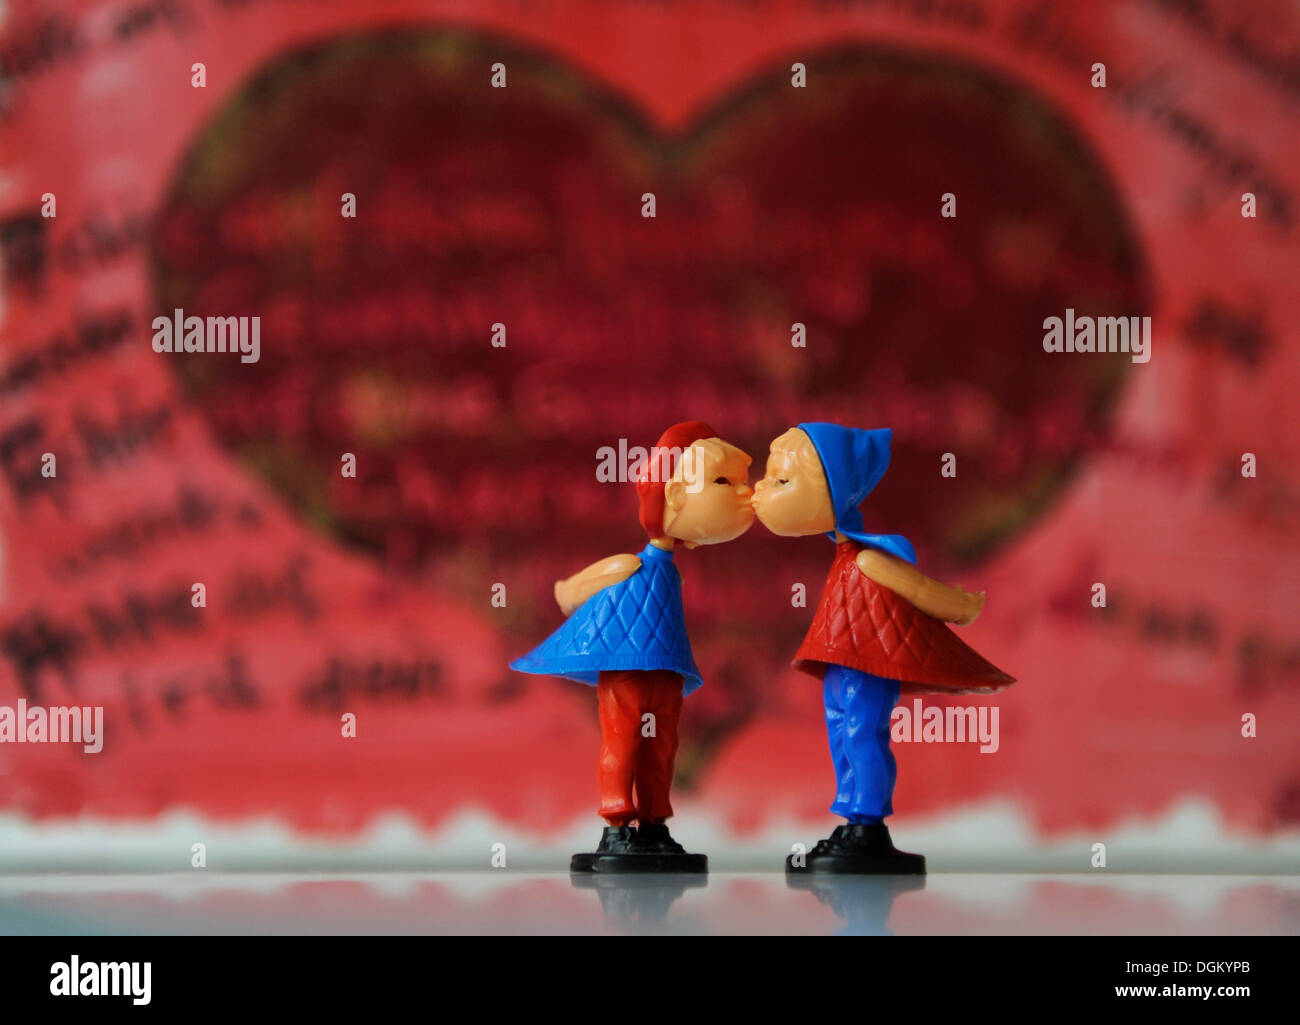 Kissing figures, symbolic image for love, partnership, marriage Stock Photo